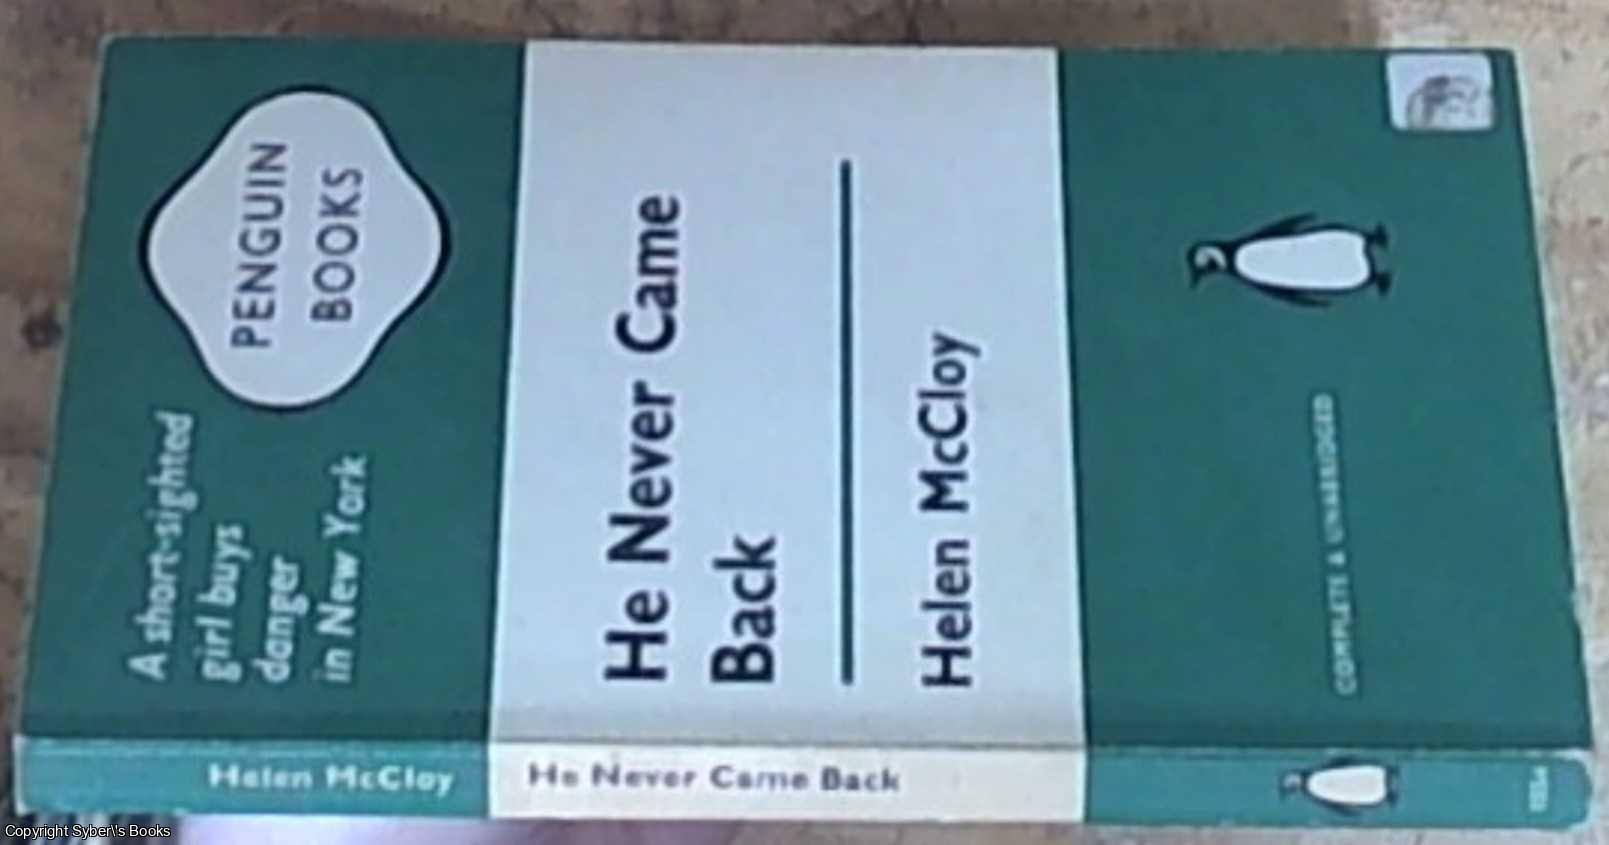 McCloy, Helen - He Never Came Back (Penguin Crime 1554)